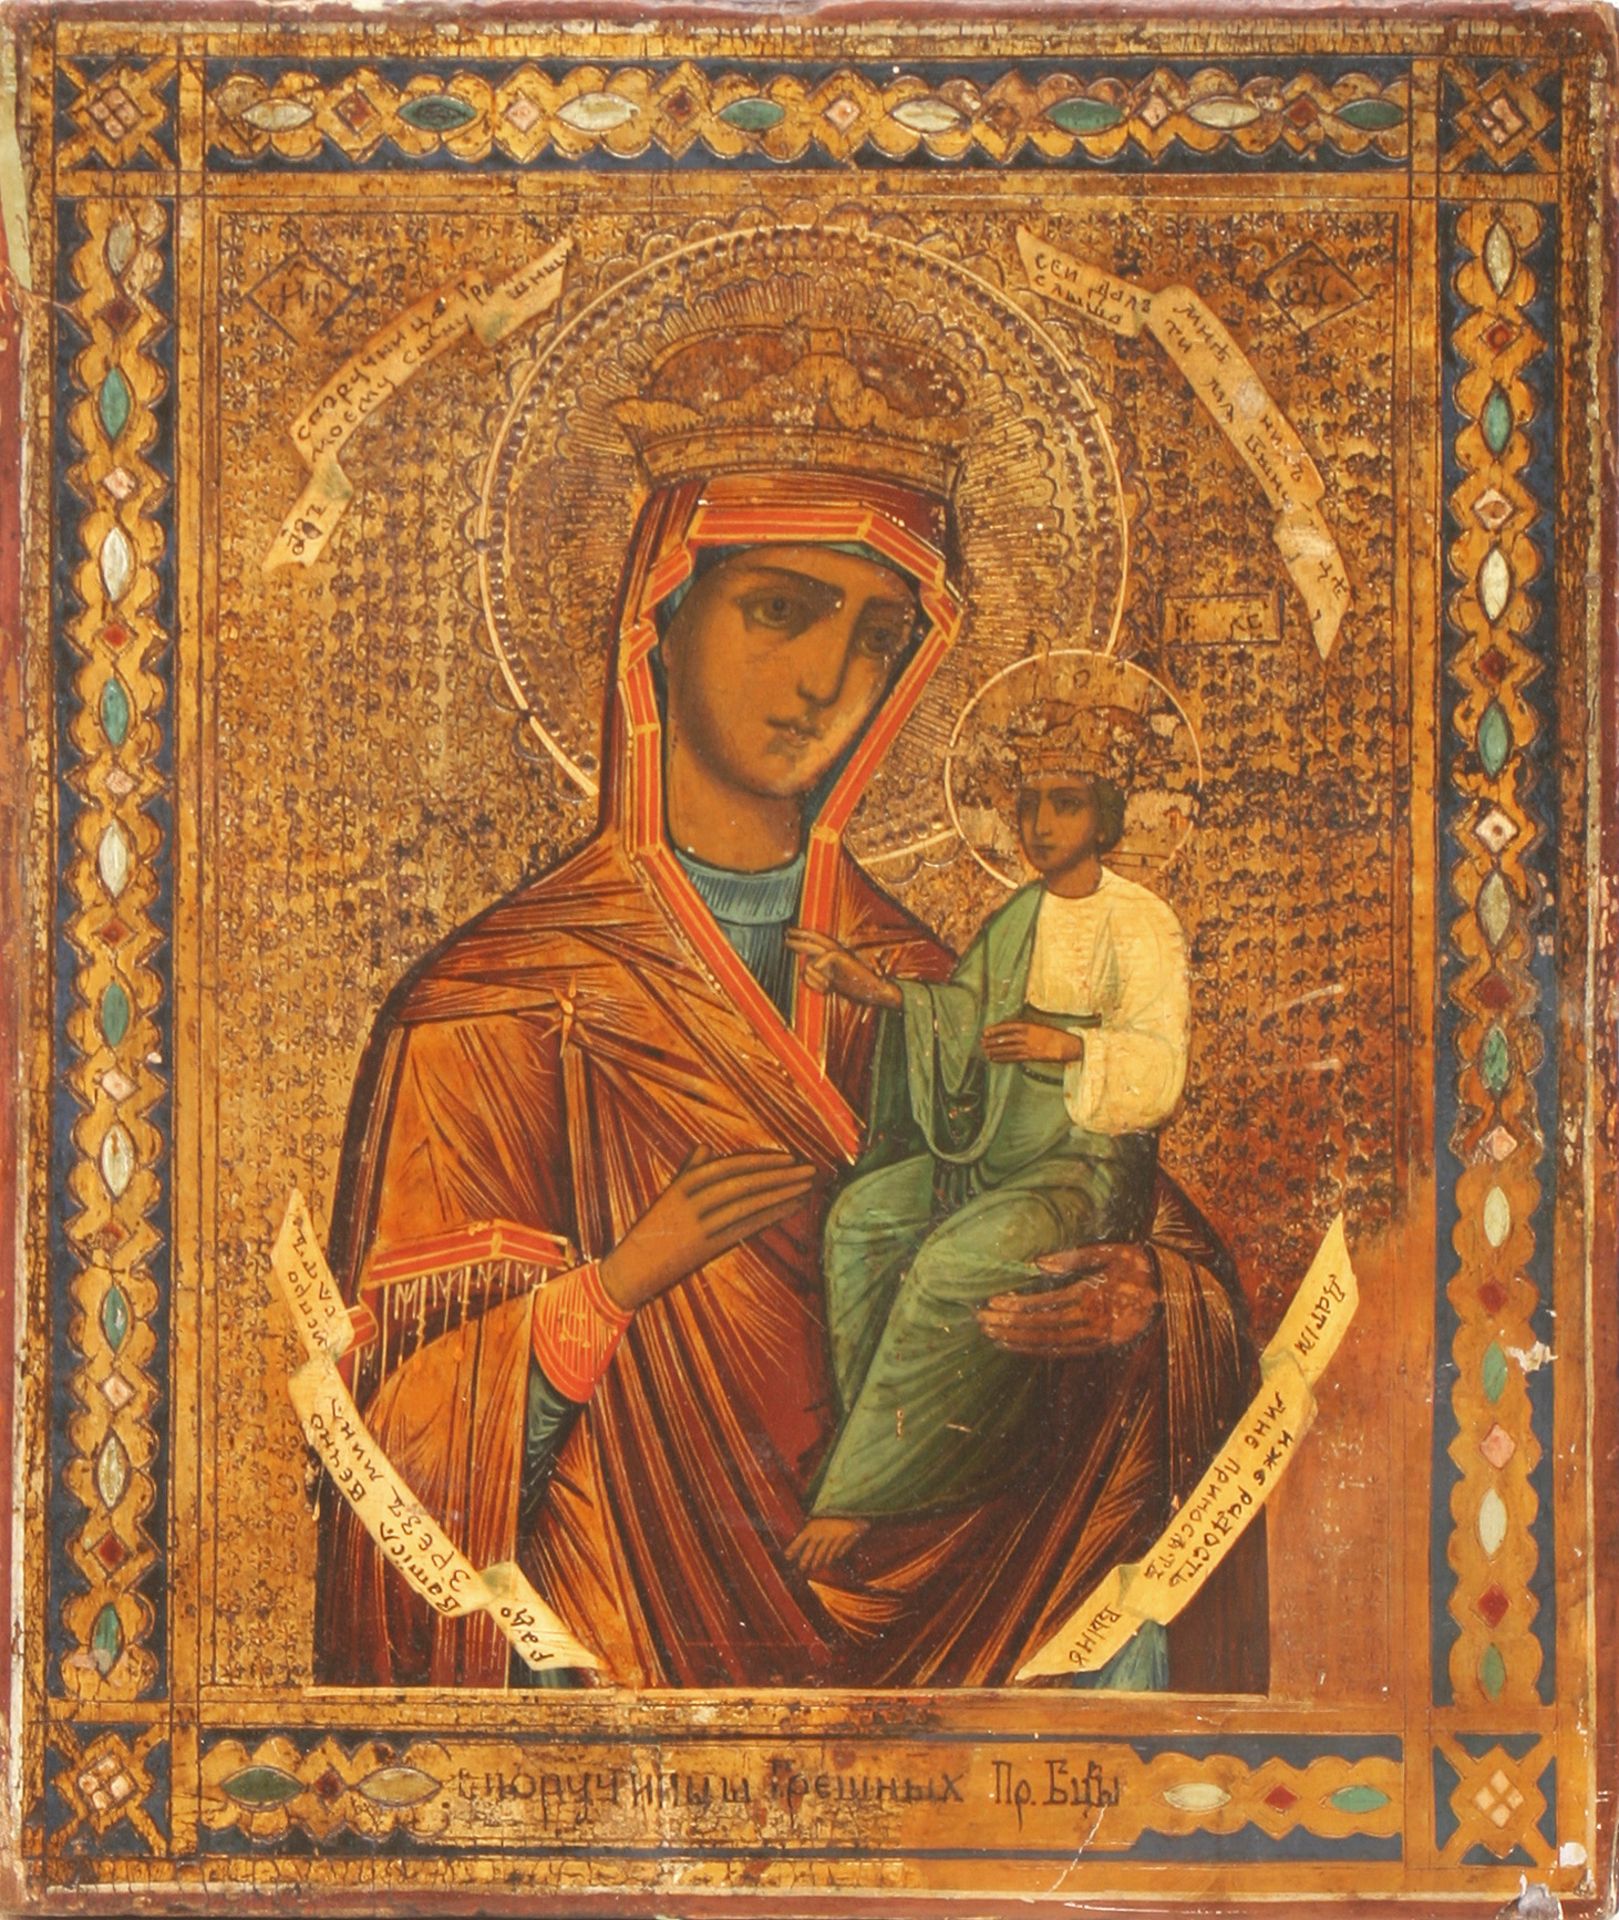 Russian icon "Our Lady “Sporuchniza greshnyh” (Surety of sinners)". - Russia, 19th cent. - 27x23 cm.